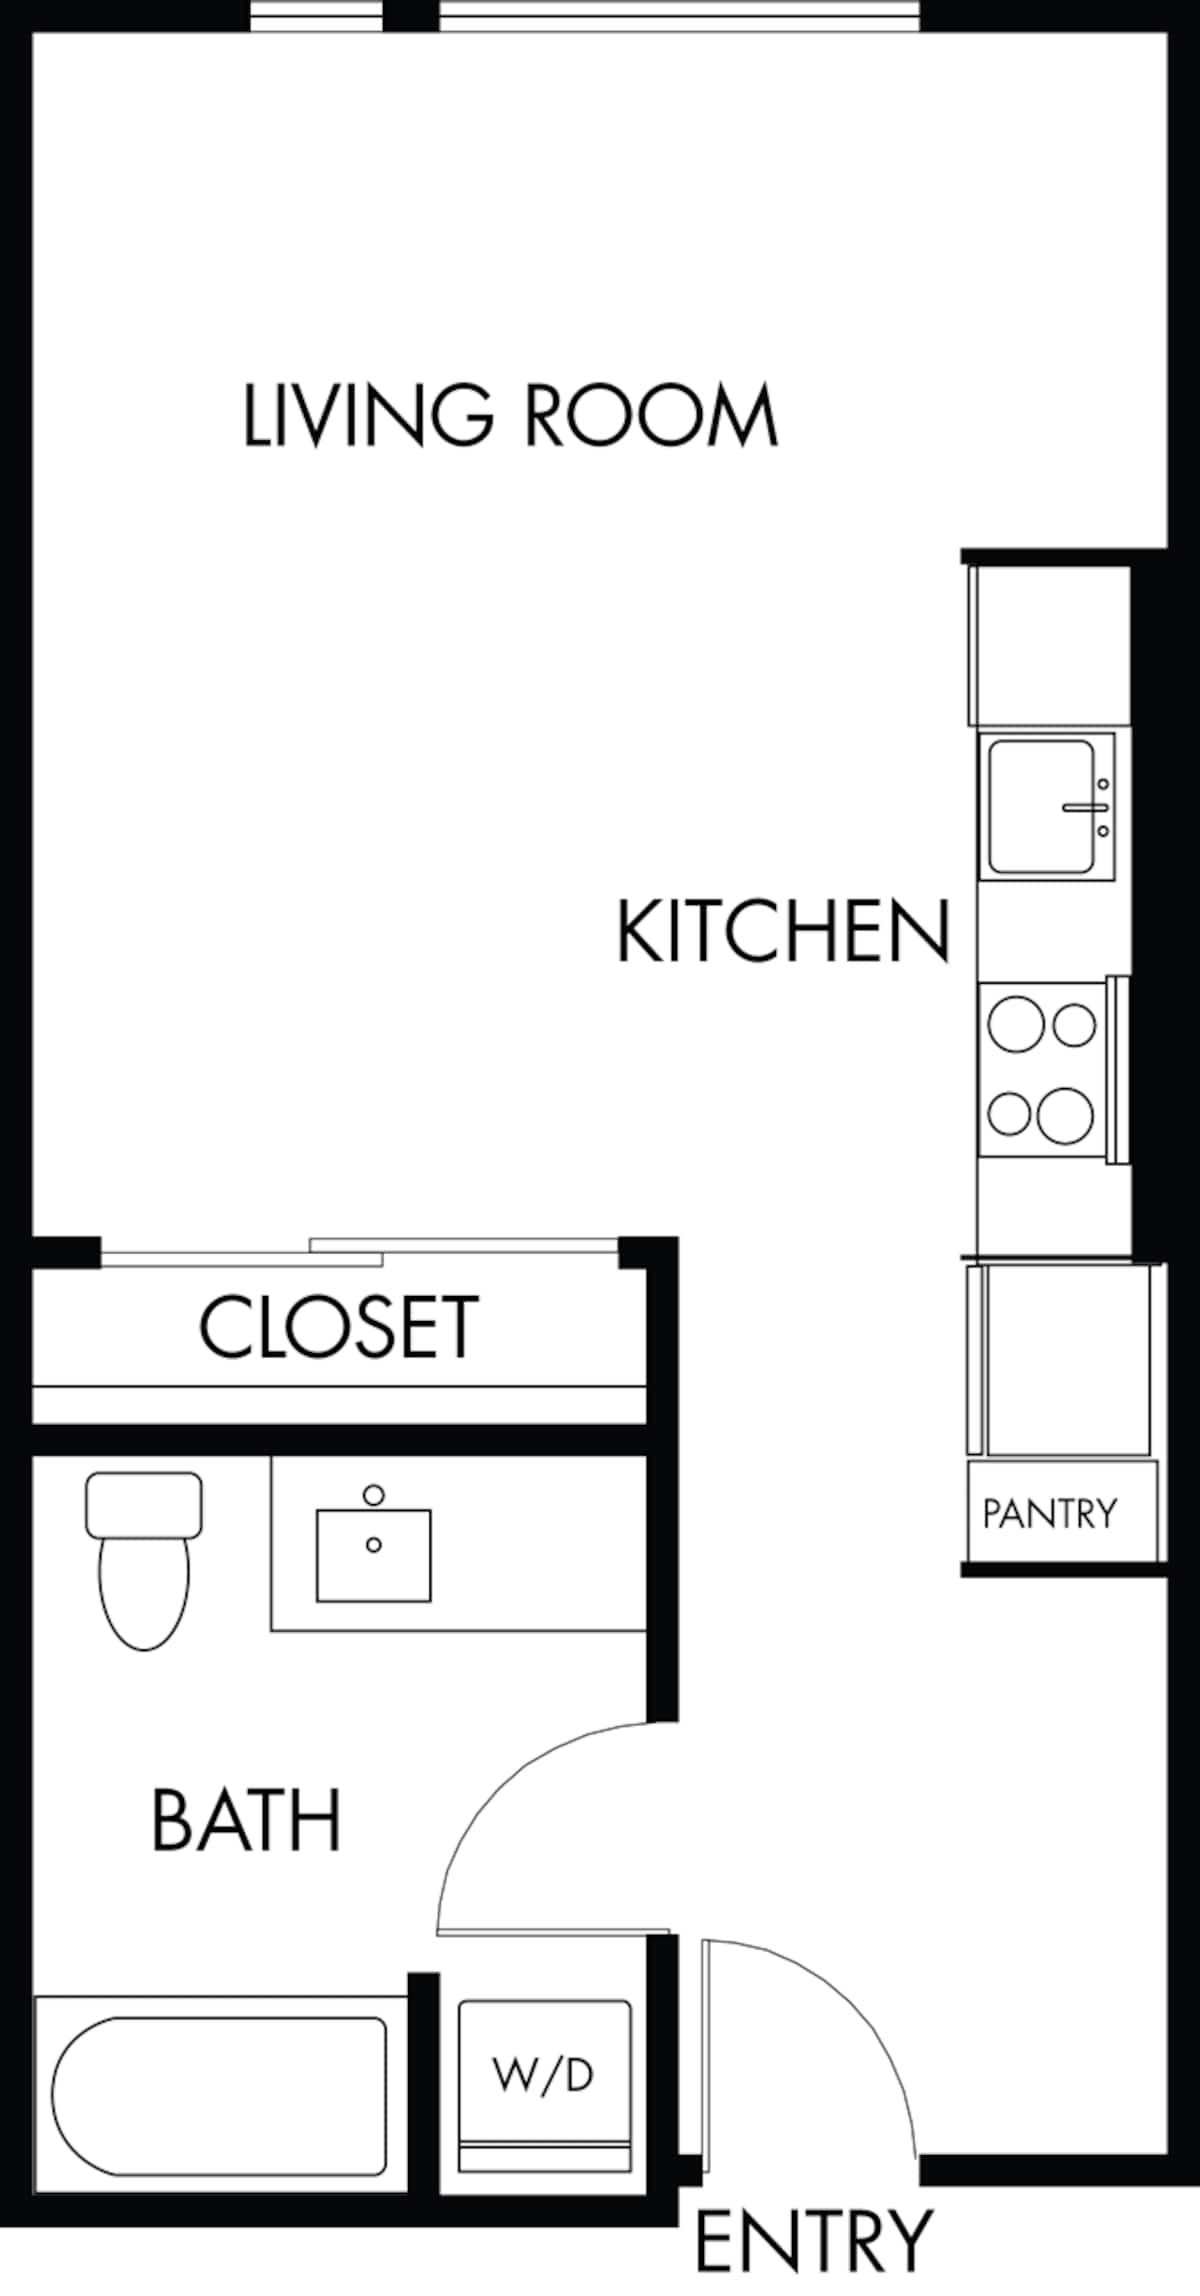 Floorplan diagram for S.2 Type A, showing Studio